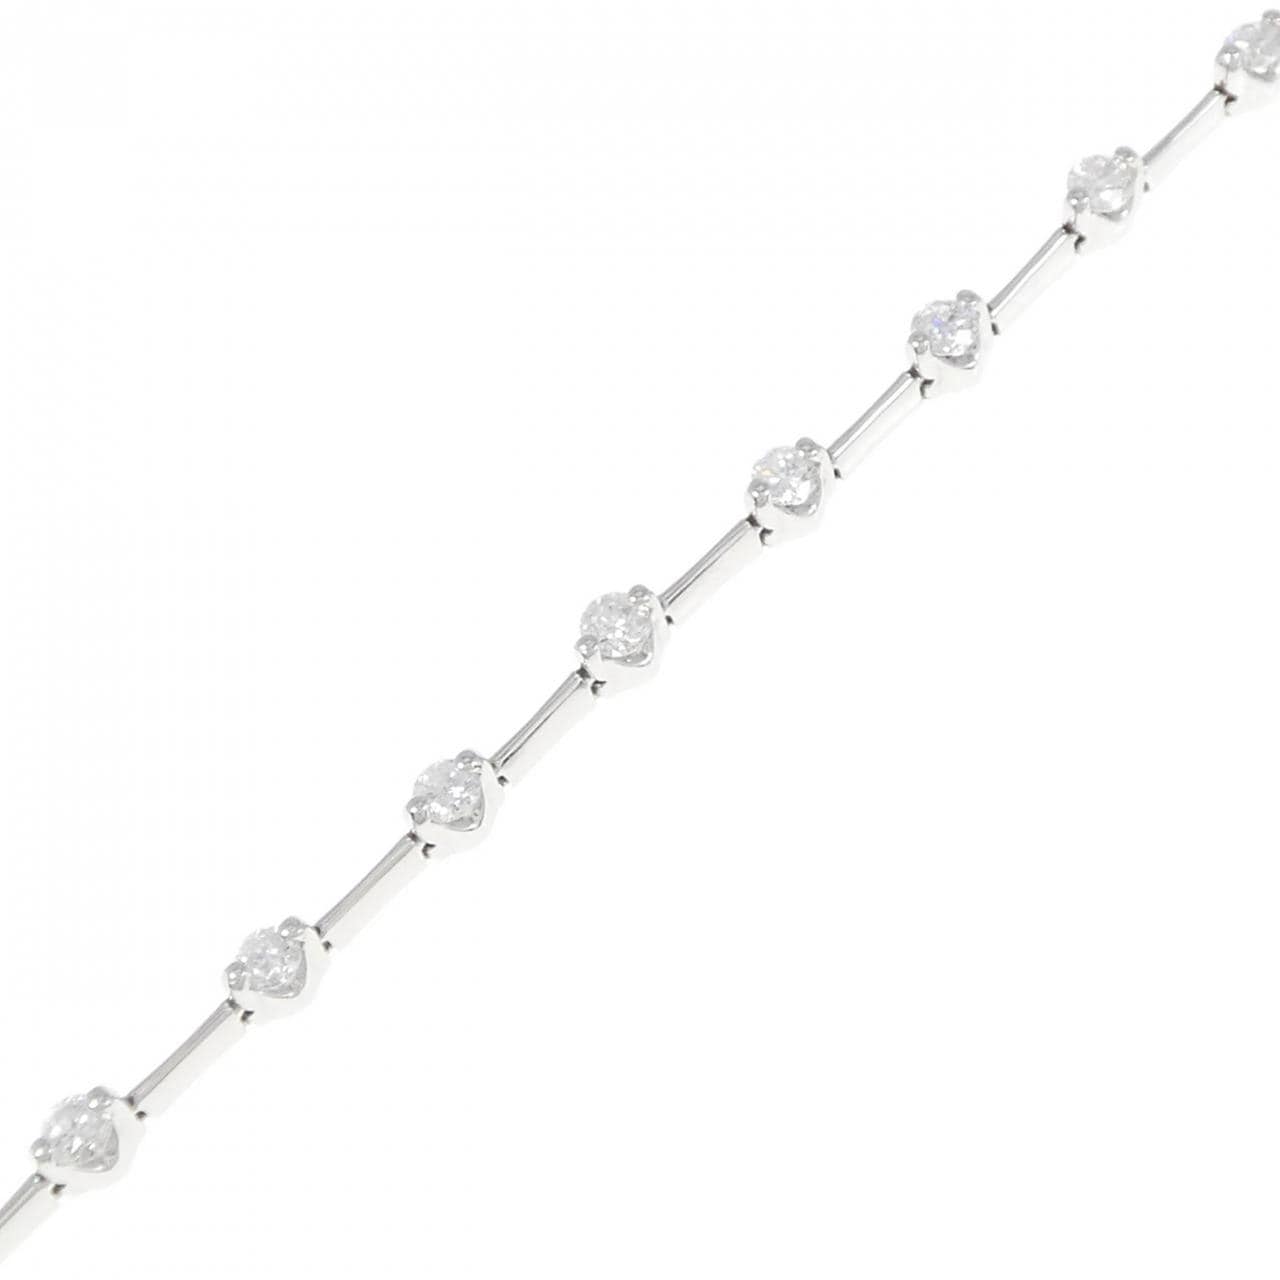 K18WG Diamond Bracelet 1.51CT